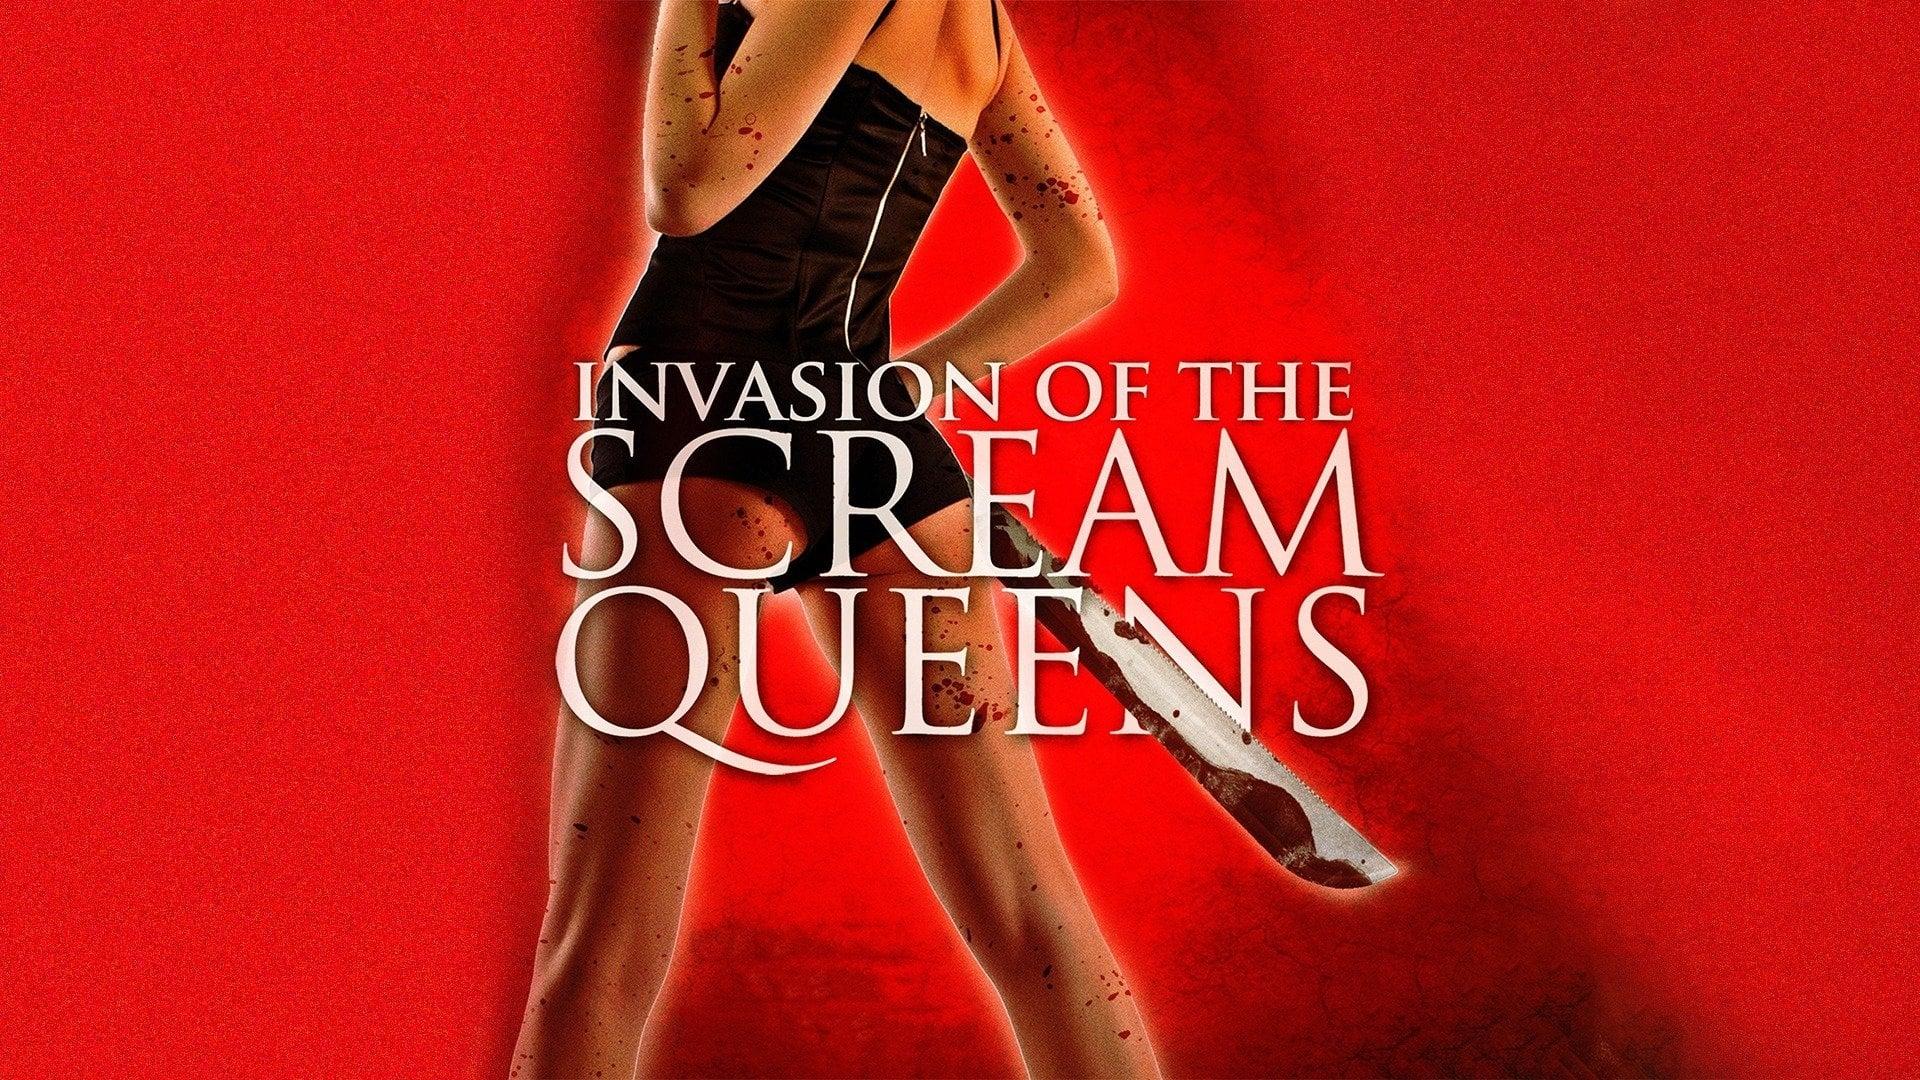 Invasion of the Scream Queens backdrop